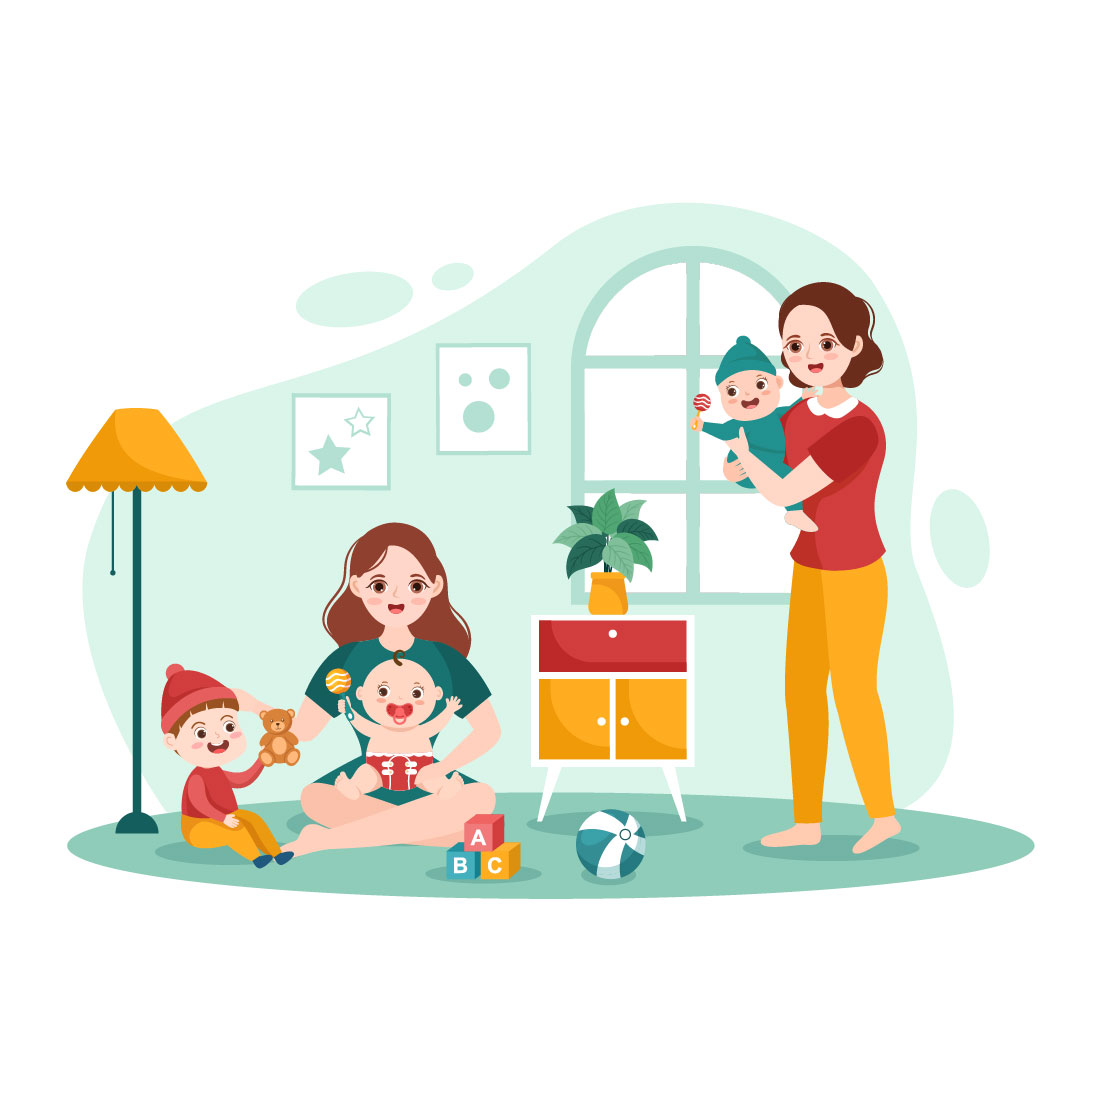 Babysitter or Nanny Services Illustration cover image.